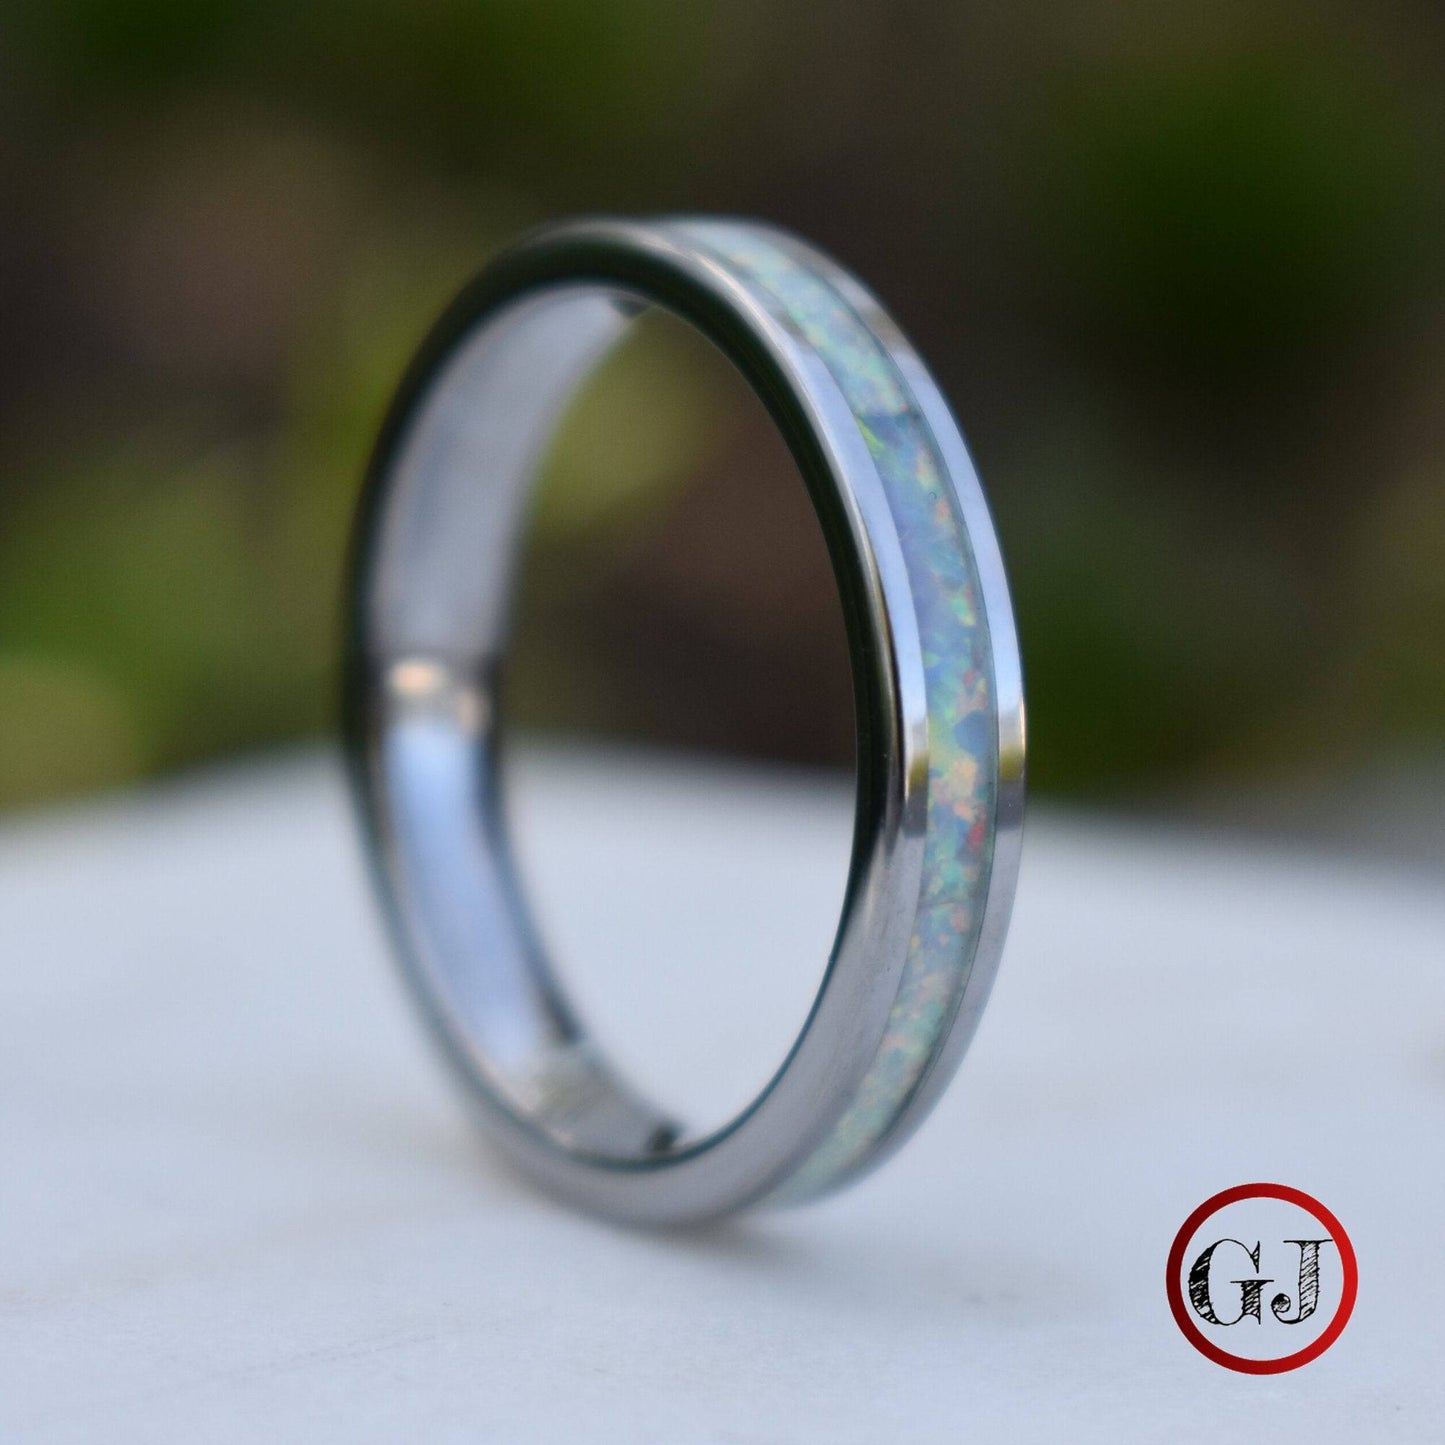 Tungsten 4mm Ring Crushed White Opal Wedding Band - Tungsten Titans